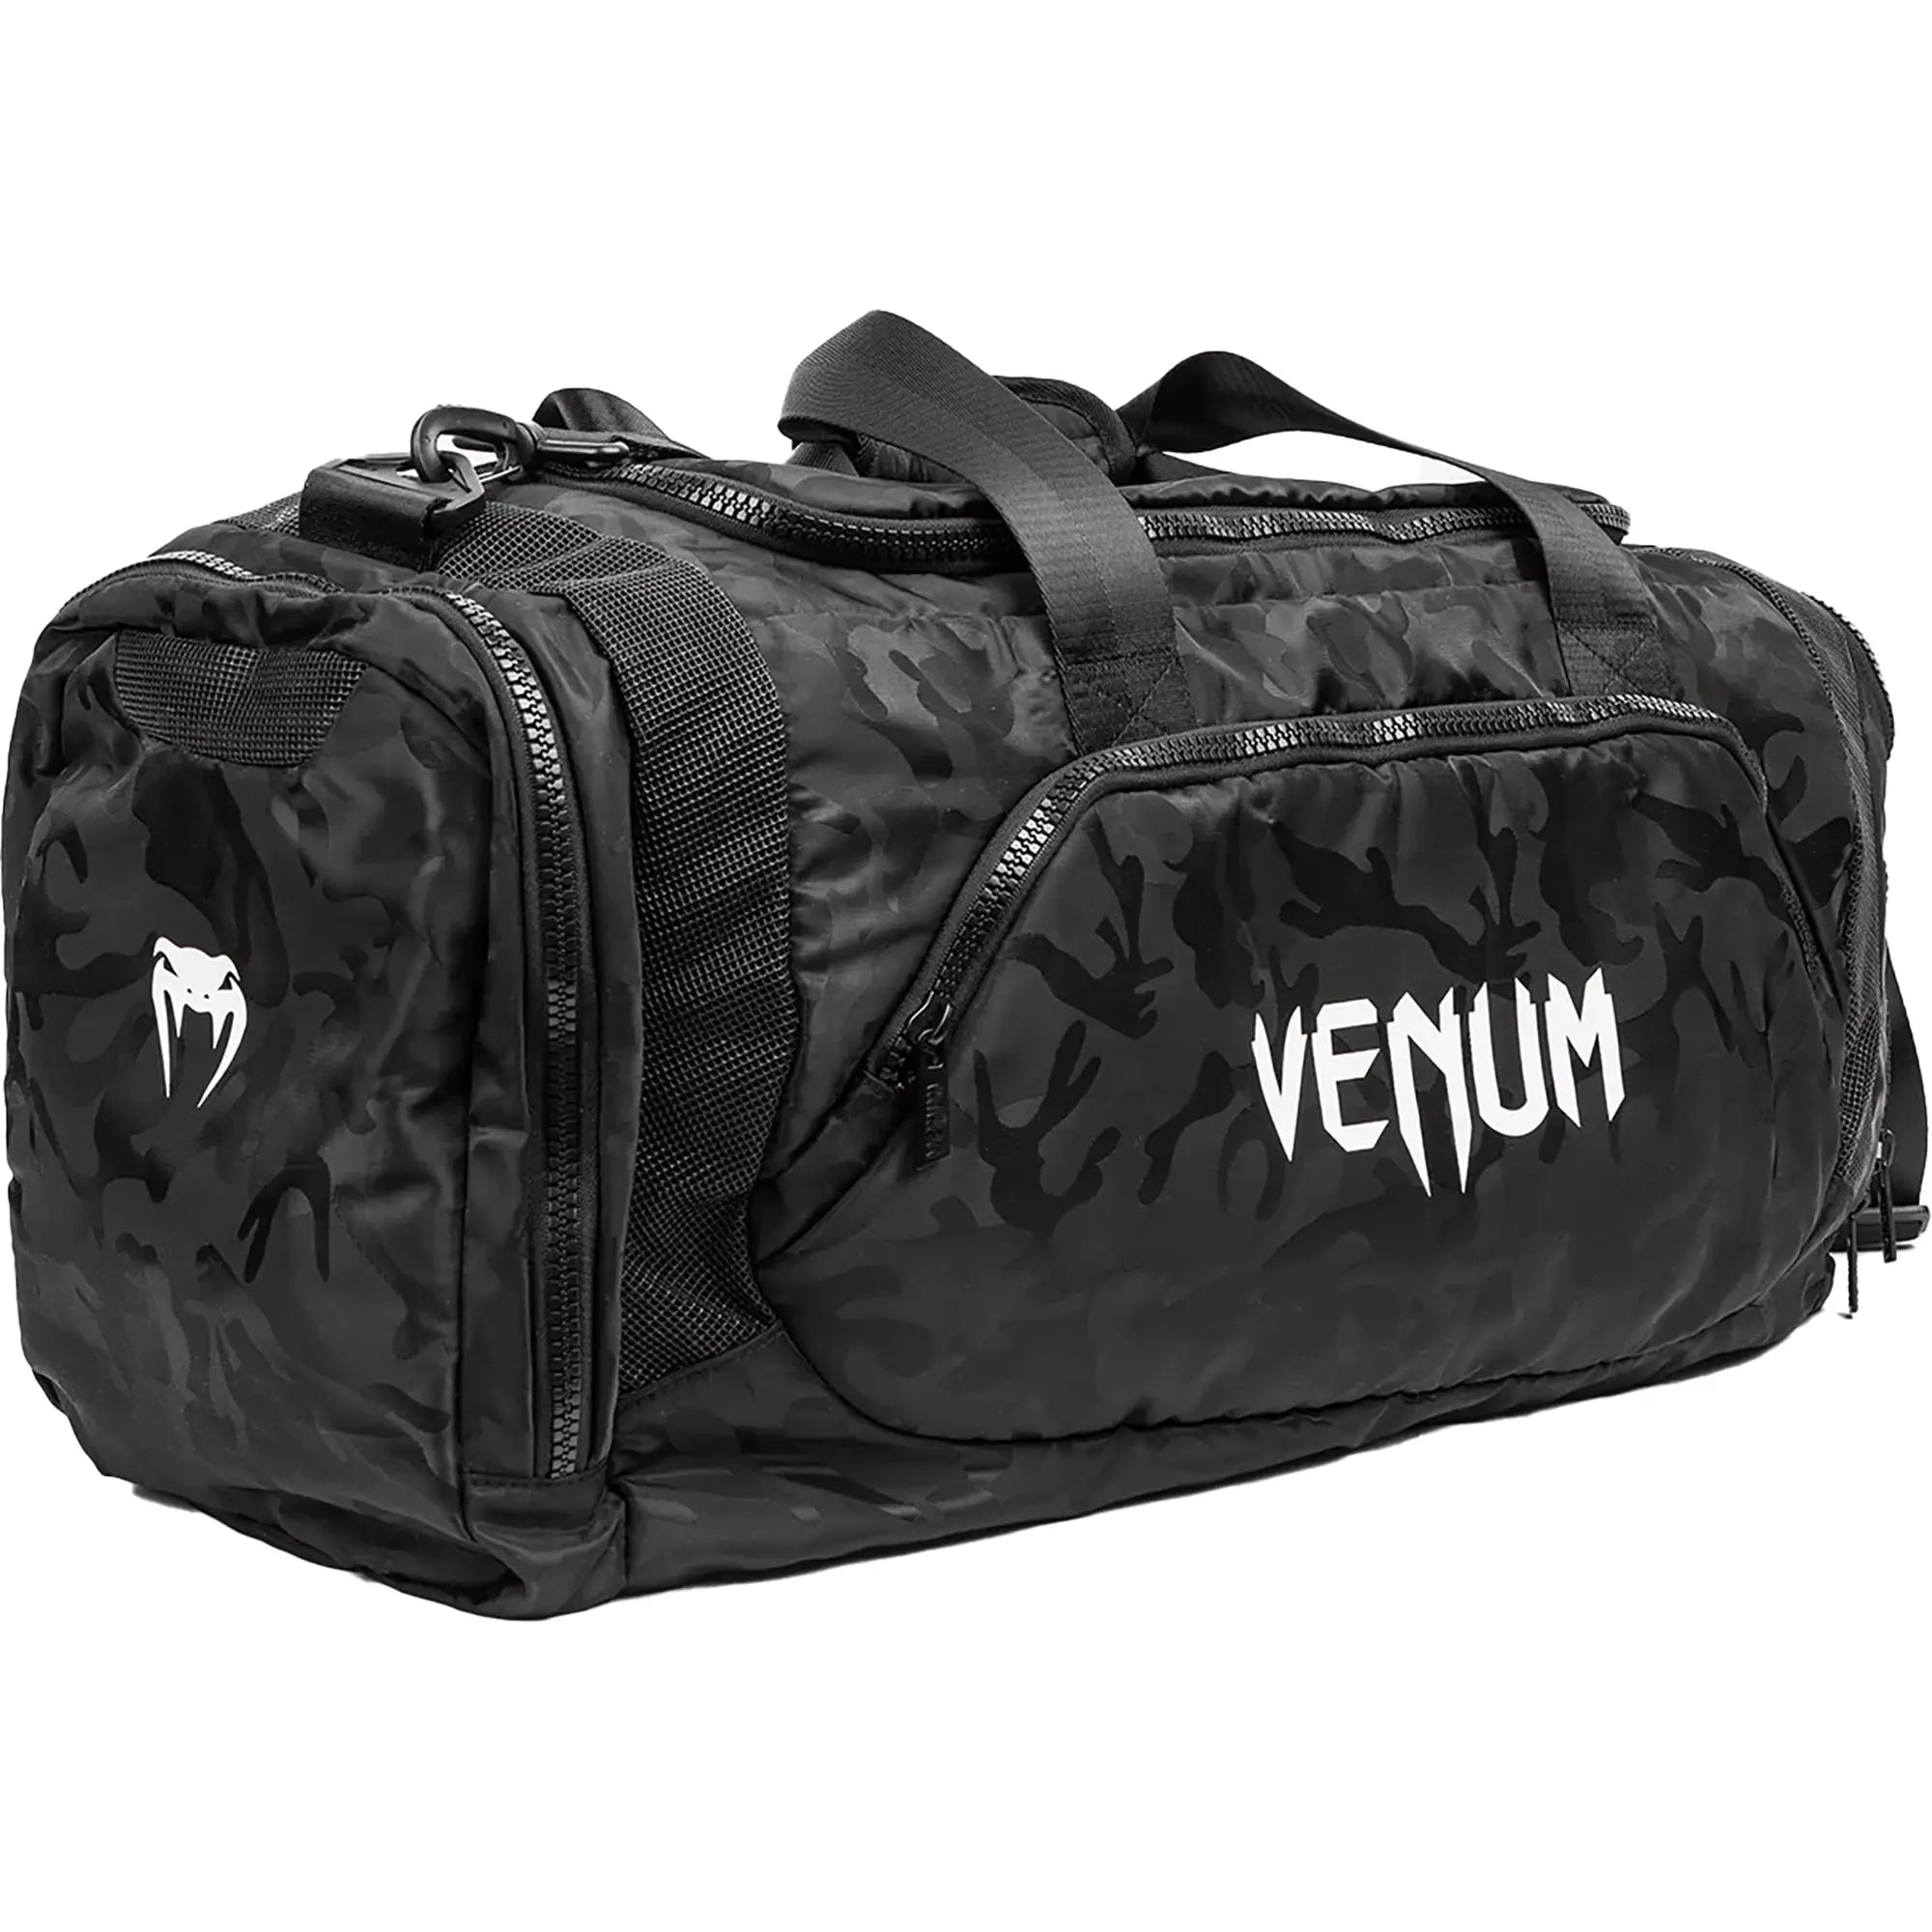 Venum Trainer Lite EVO Sport Duffle Bag - Black/Dark Camo Venum